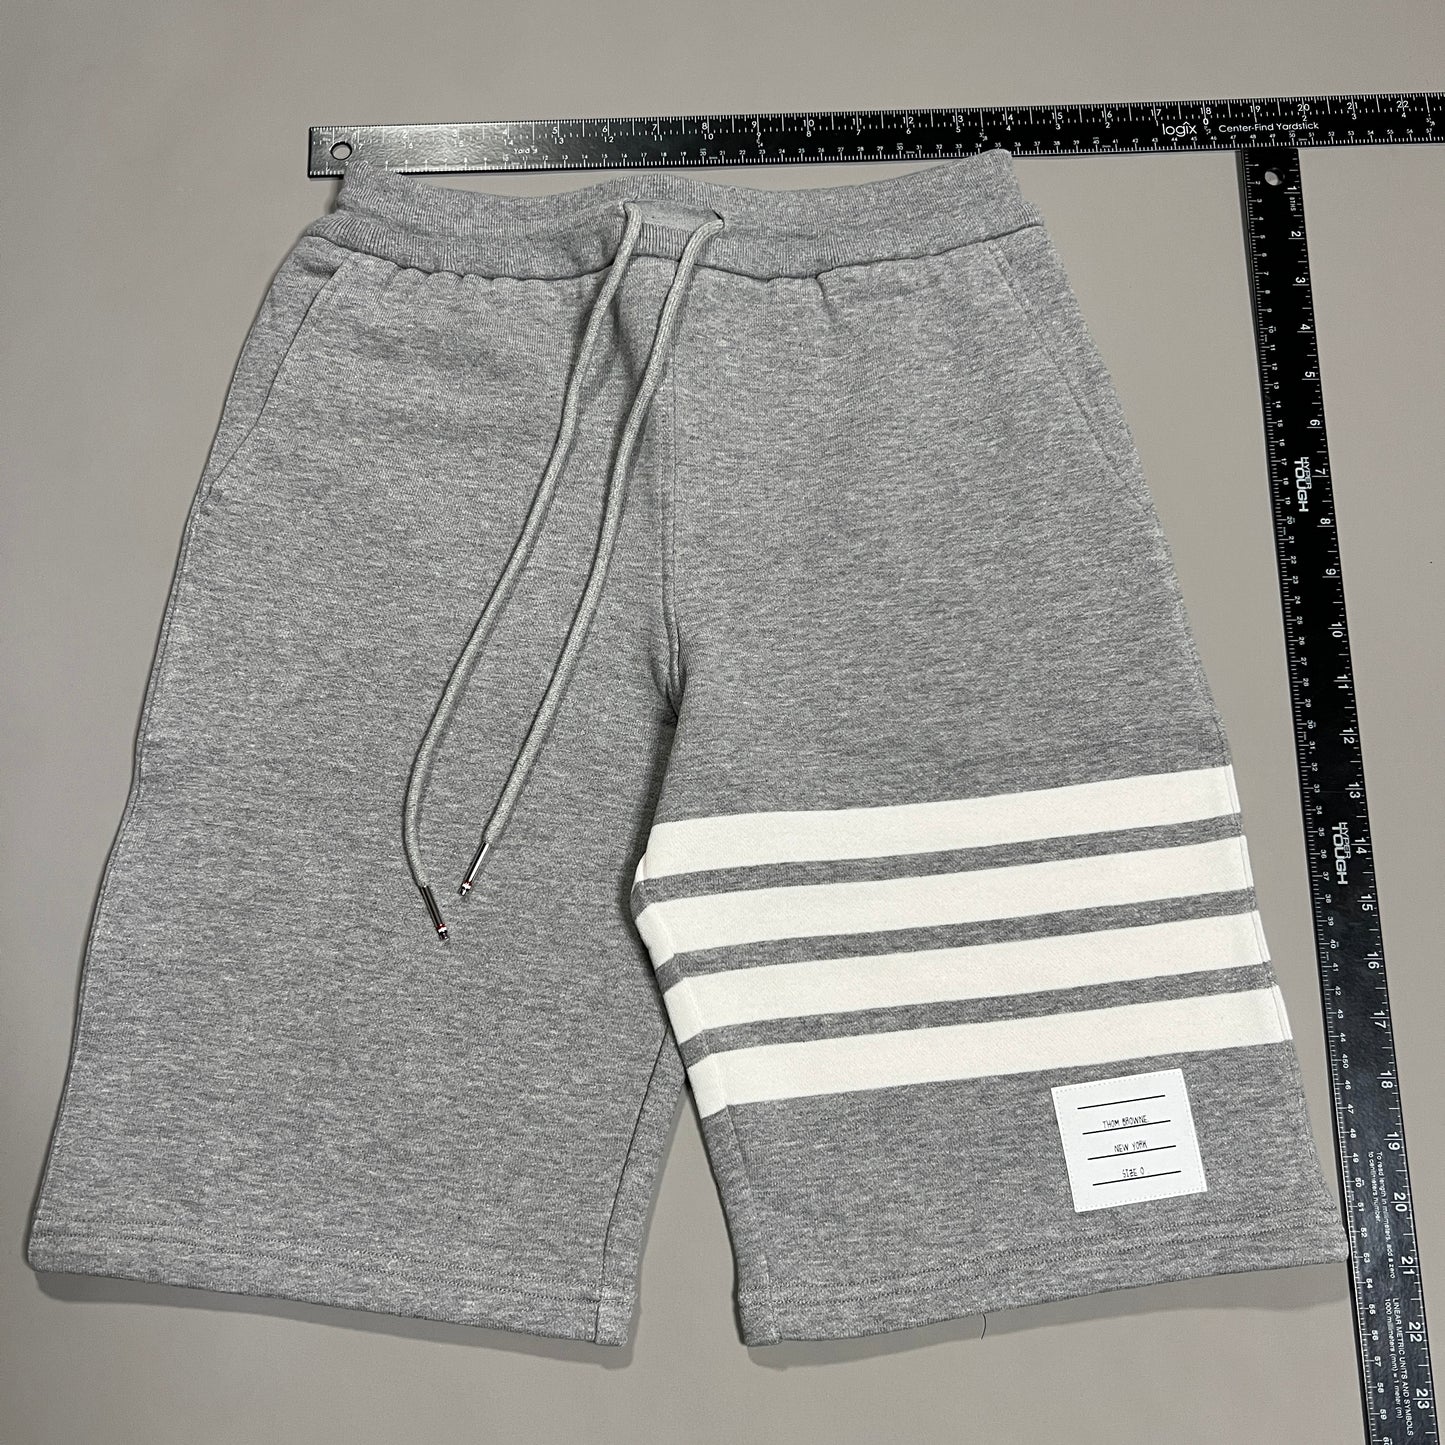 THOM BROWNE Classic Sweat Shorts w/4 Bar Loop Back Light Grey Size 0 (New)